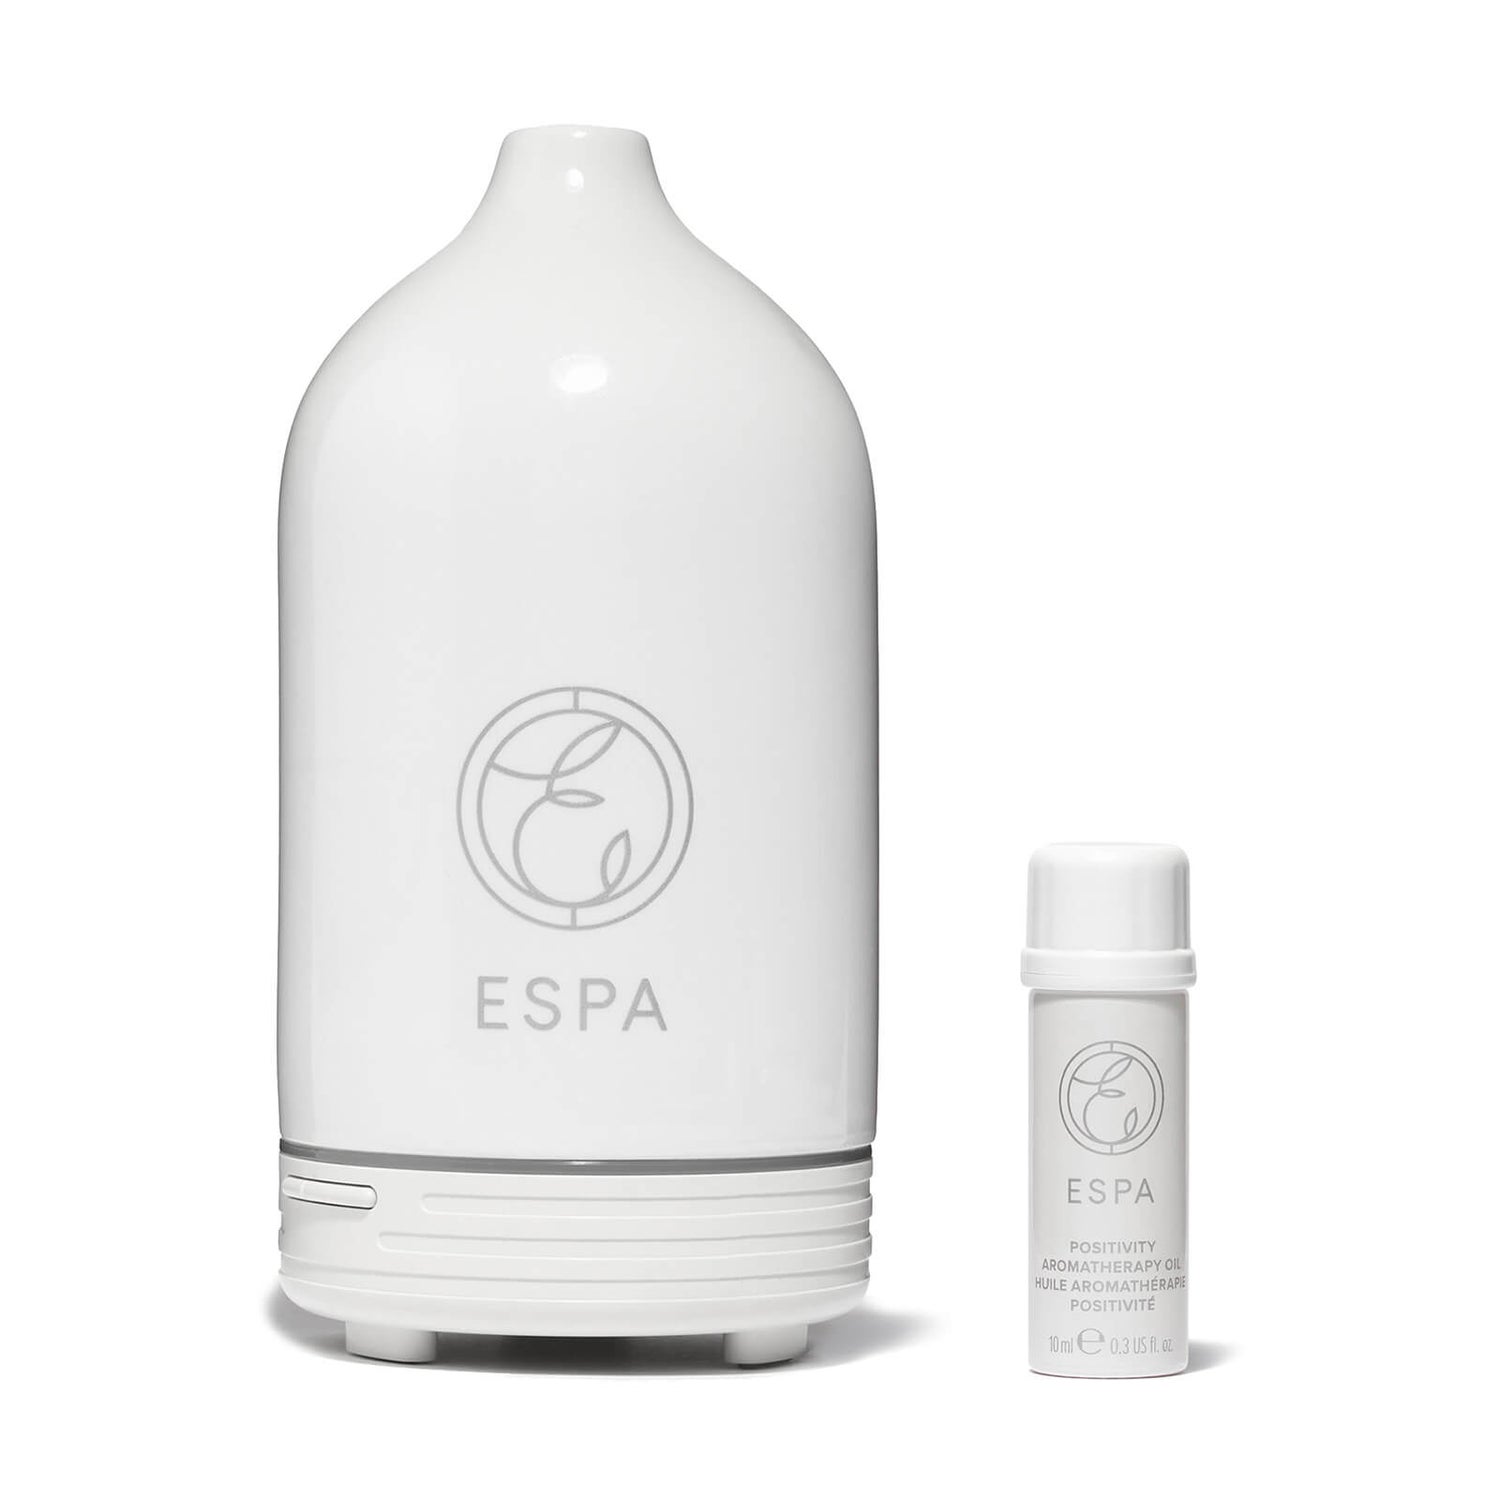 ESPA Aromatherapy Essential Oil Diffuser Starter Kit - Positivity (Worth £105.00)